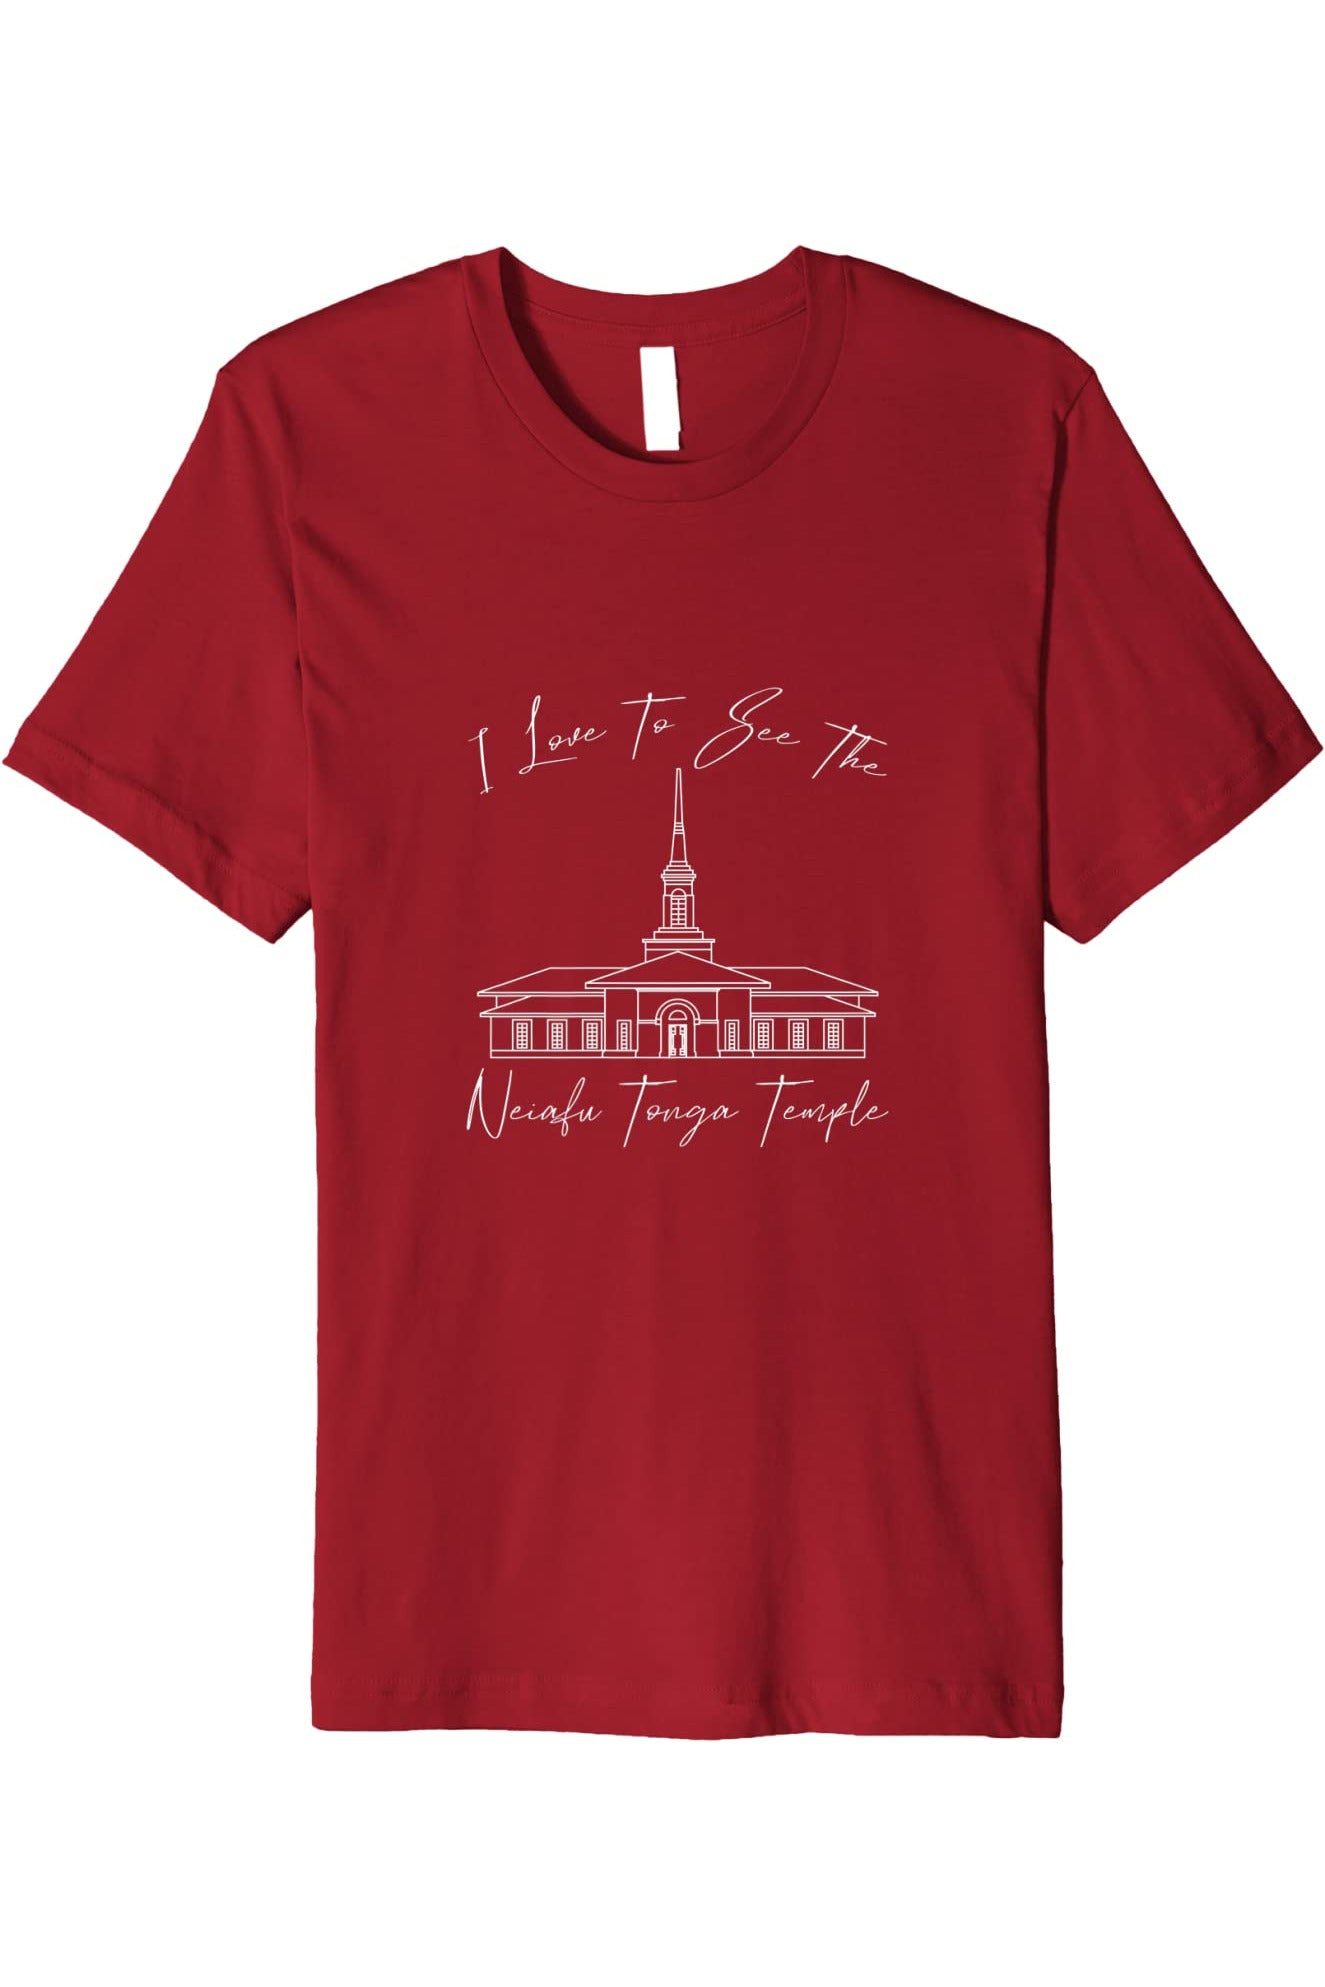 Neiafu Tonga Temple T-Shirt - Premium - Calligraphy Style (English) US